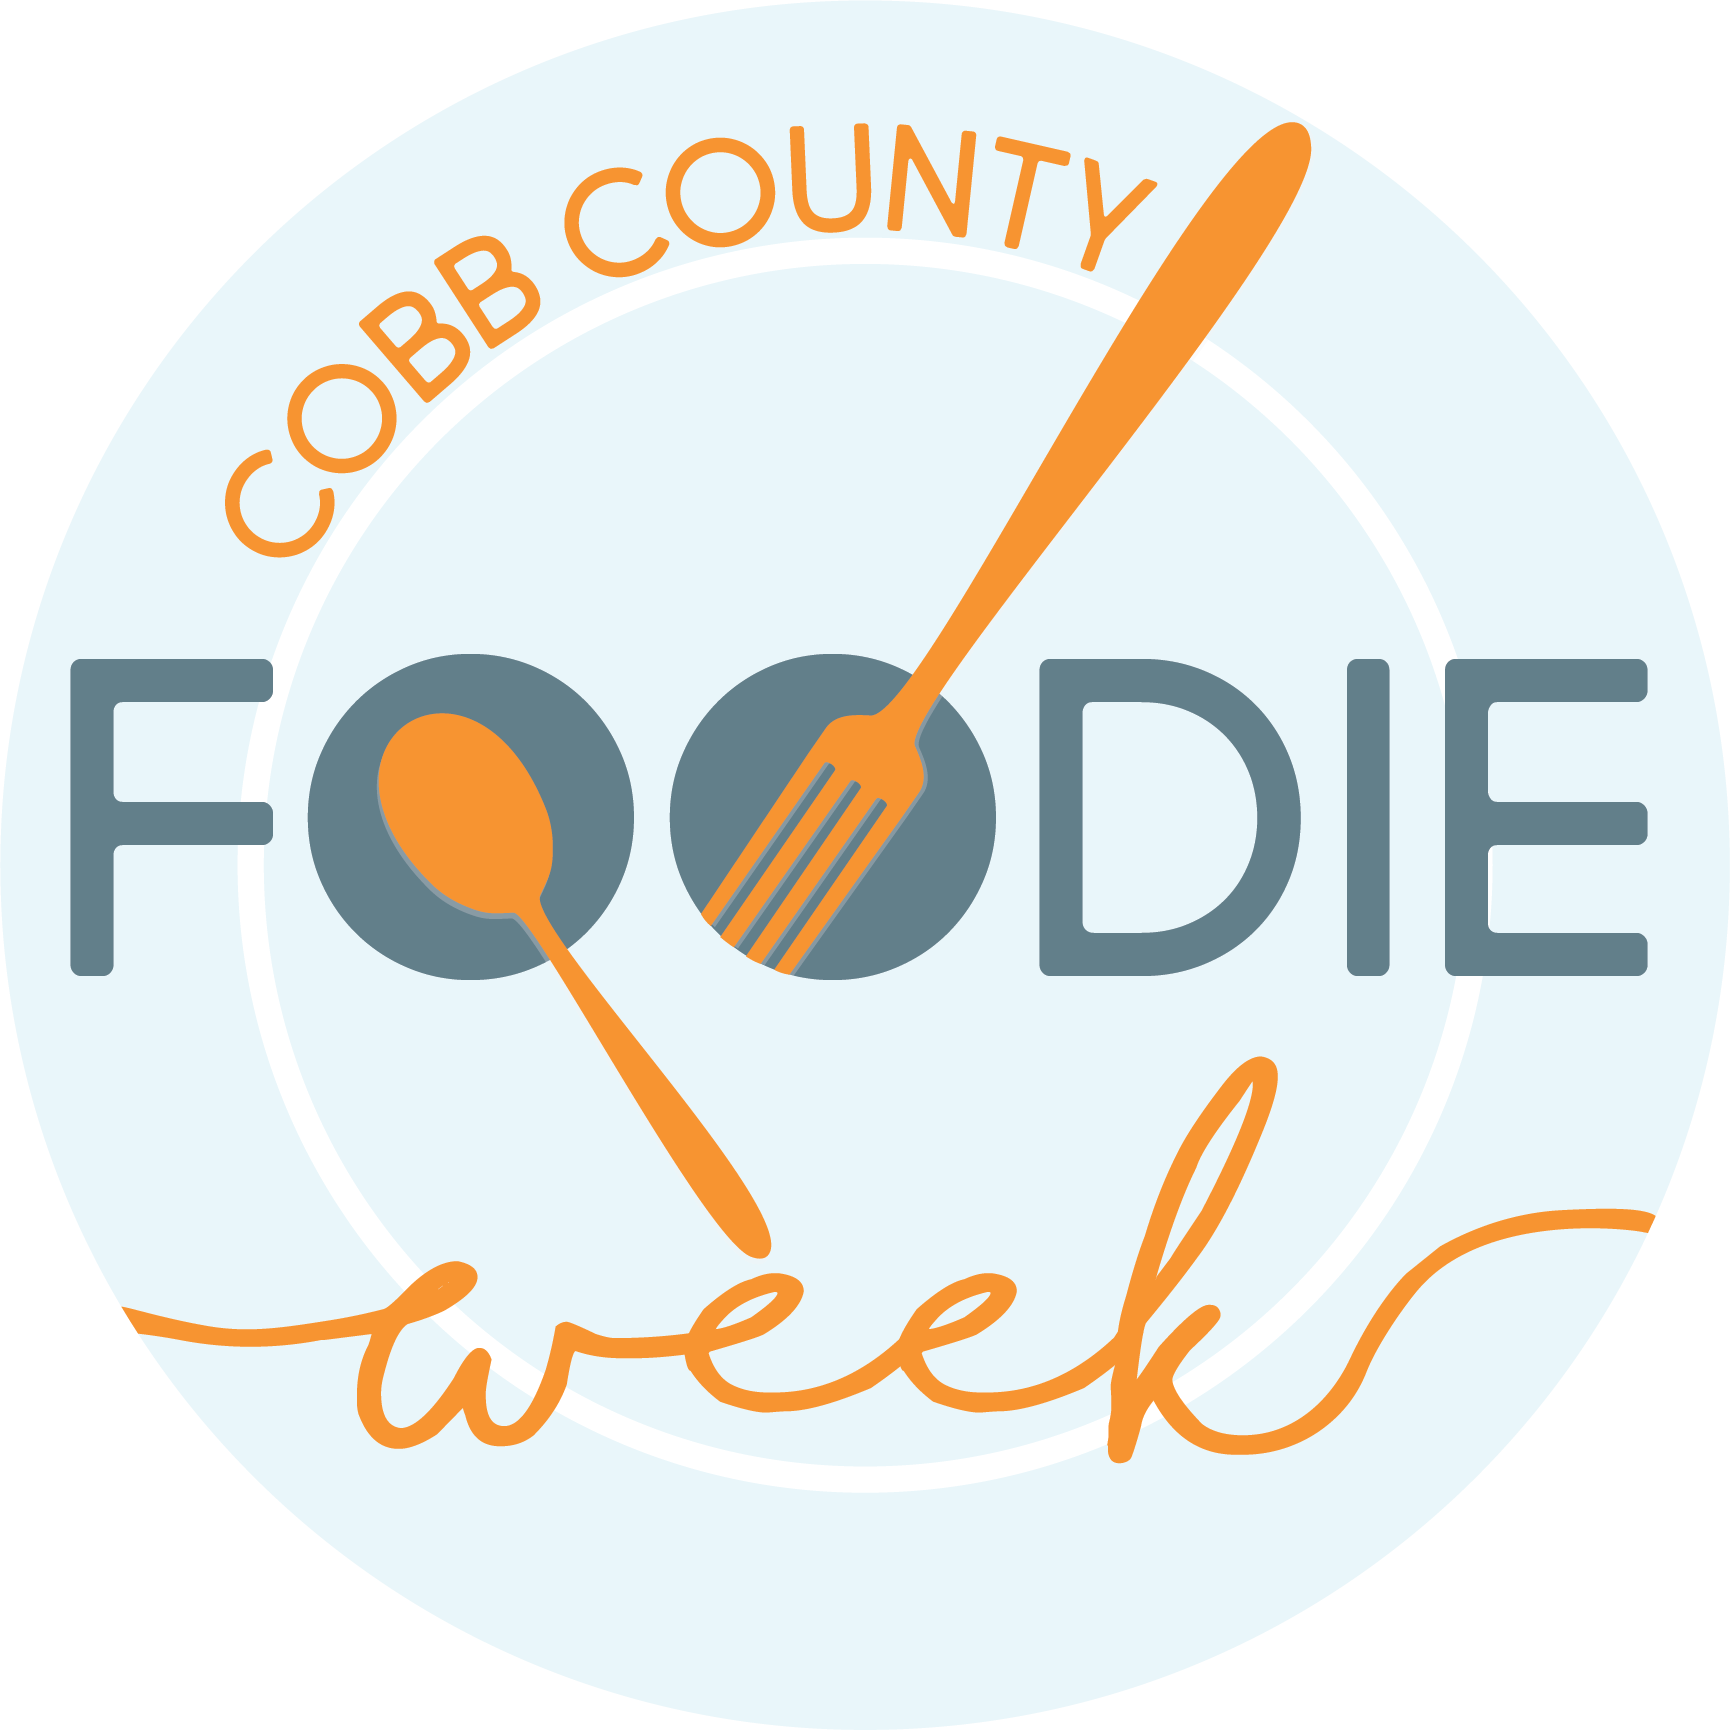 Cobb County Foodie Week Cobb Travel & Tourism